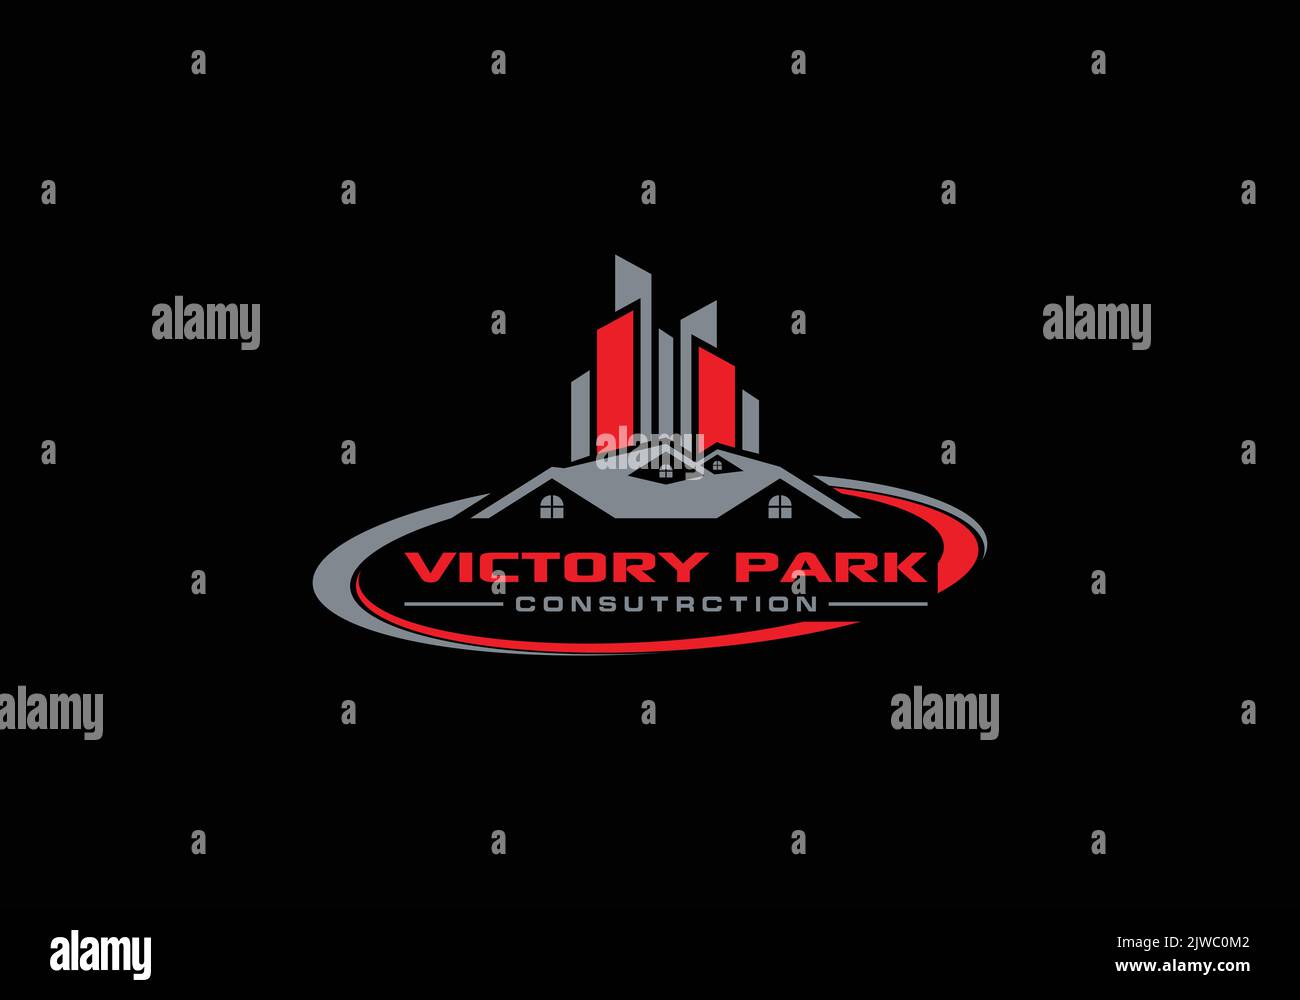 Victory Park Construction Realty Real Estate Logo Design Stock Vector